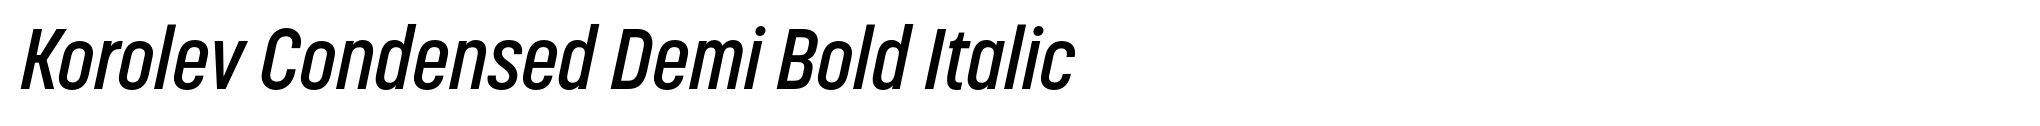 Korolev Condensed Demi Bold Italic image